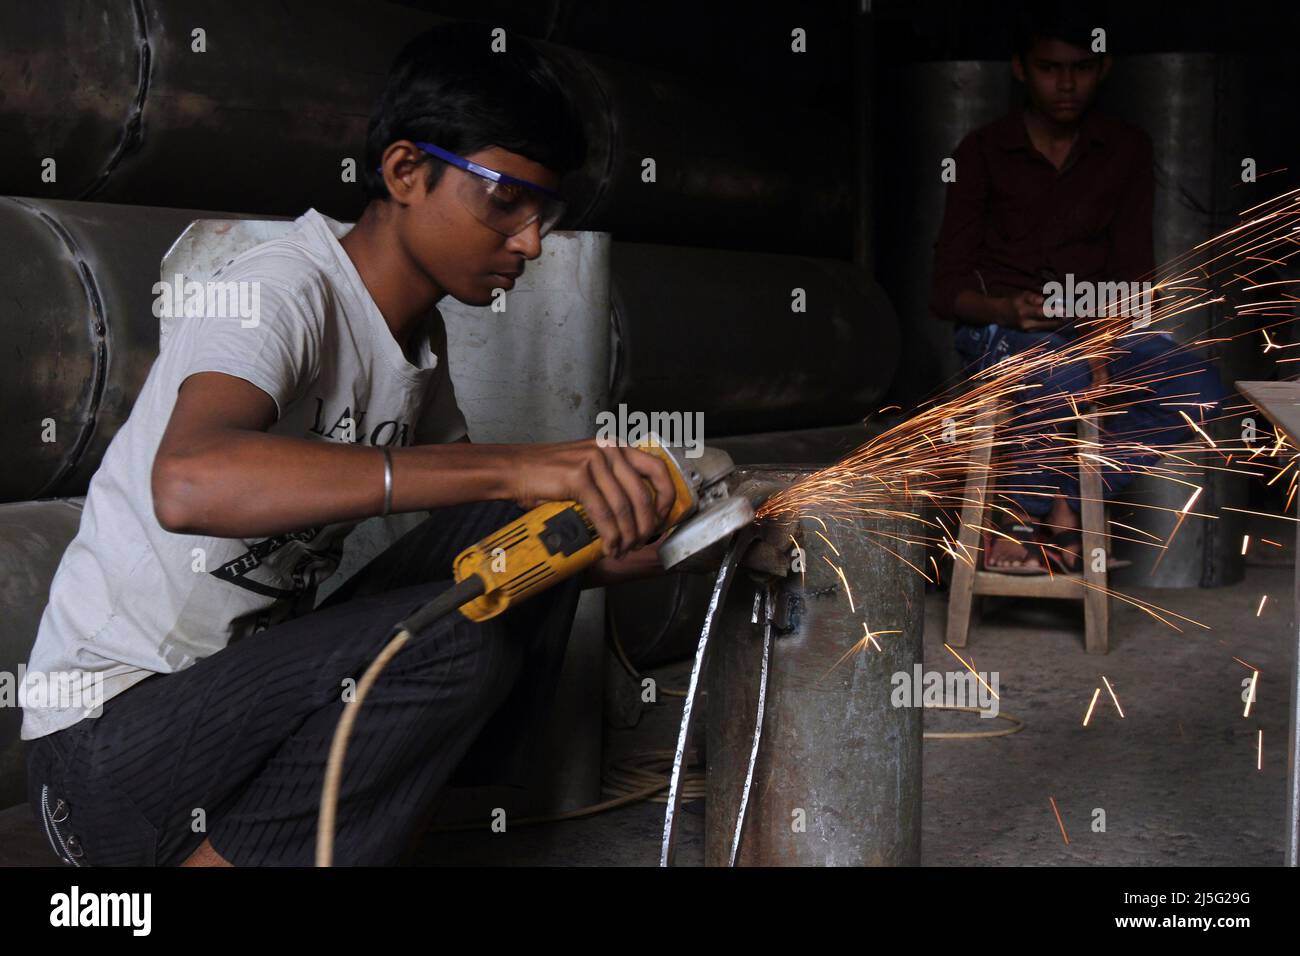 Dhaka, Bangladesch - 22. November 2014: Bangladeschische Kinder machen riskante Arbeit Drehmaschine. Stockfoto